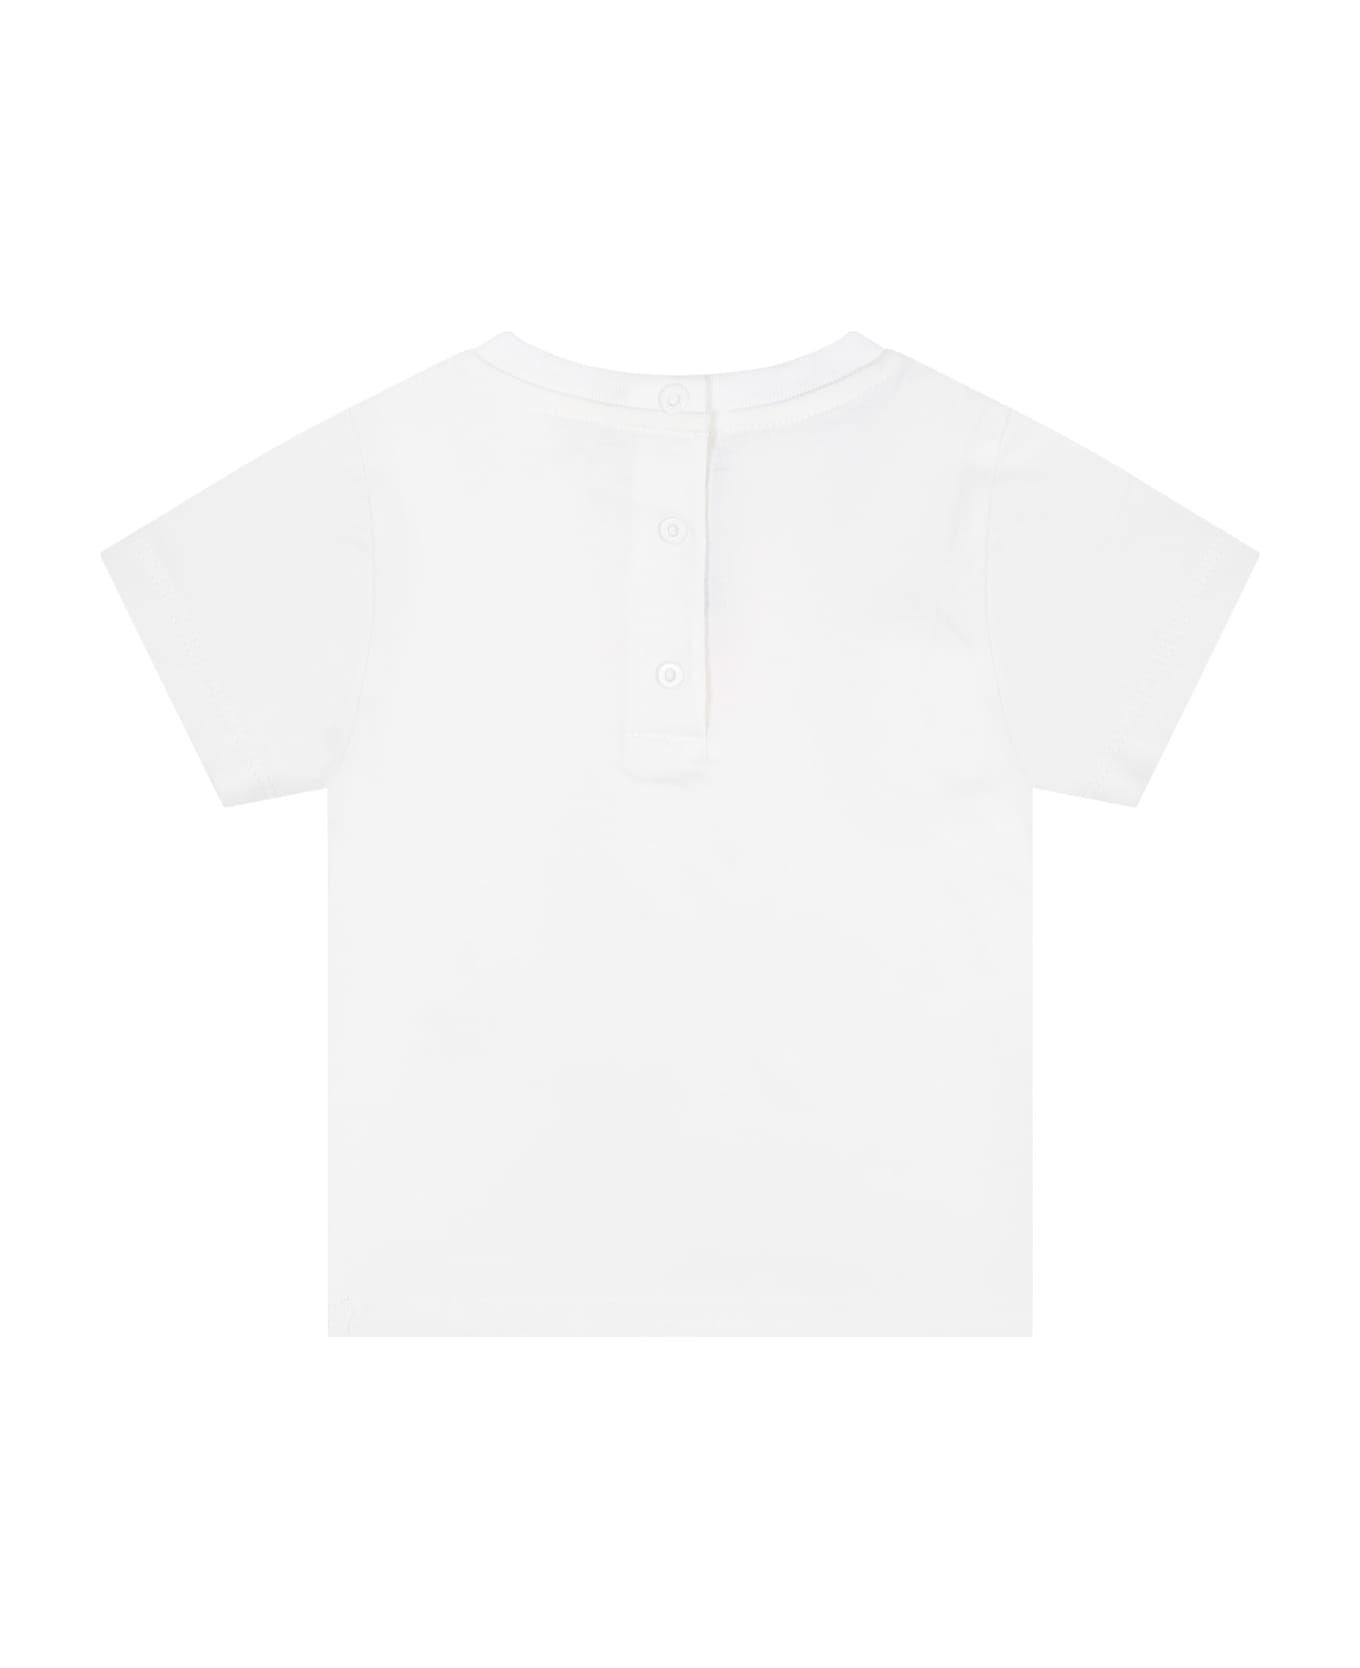 Balmain White T-shirt For Baby Girl With Logo - White